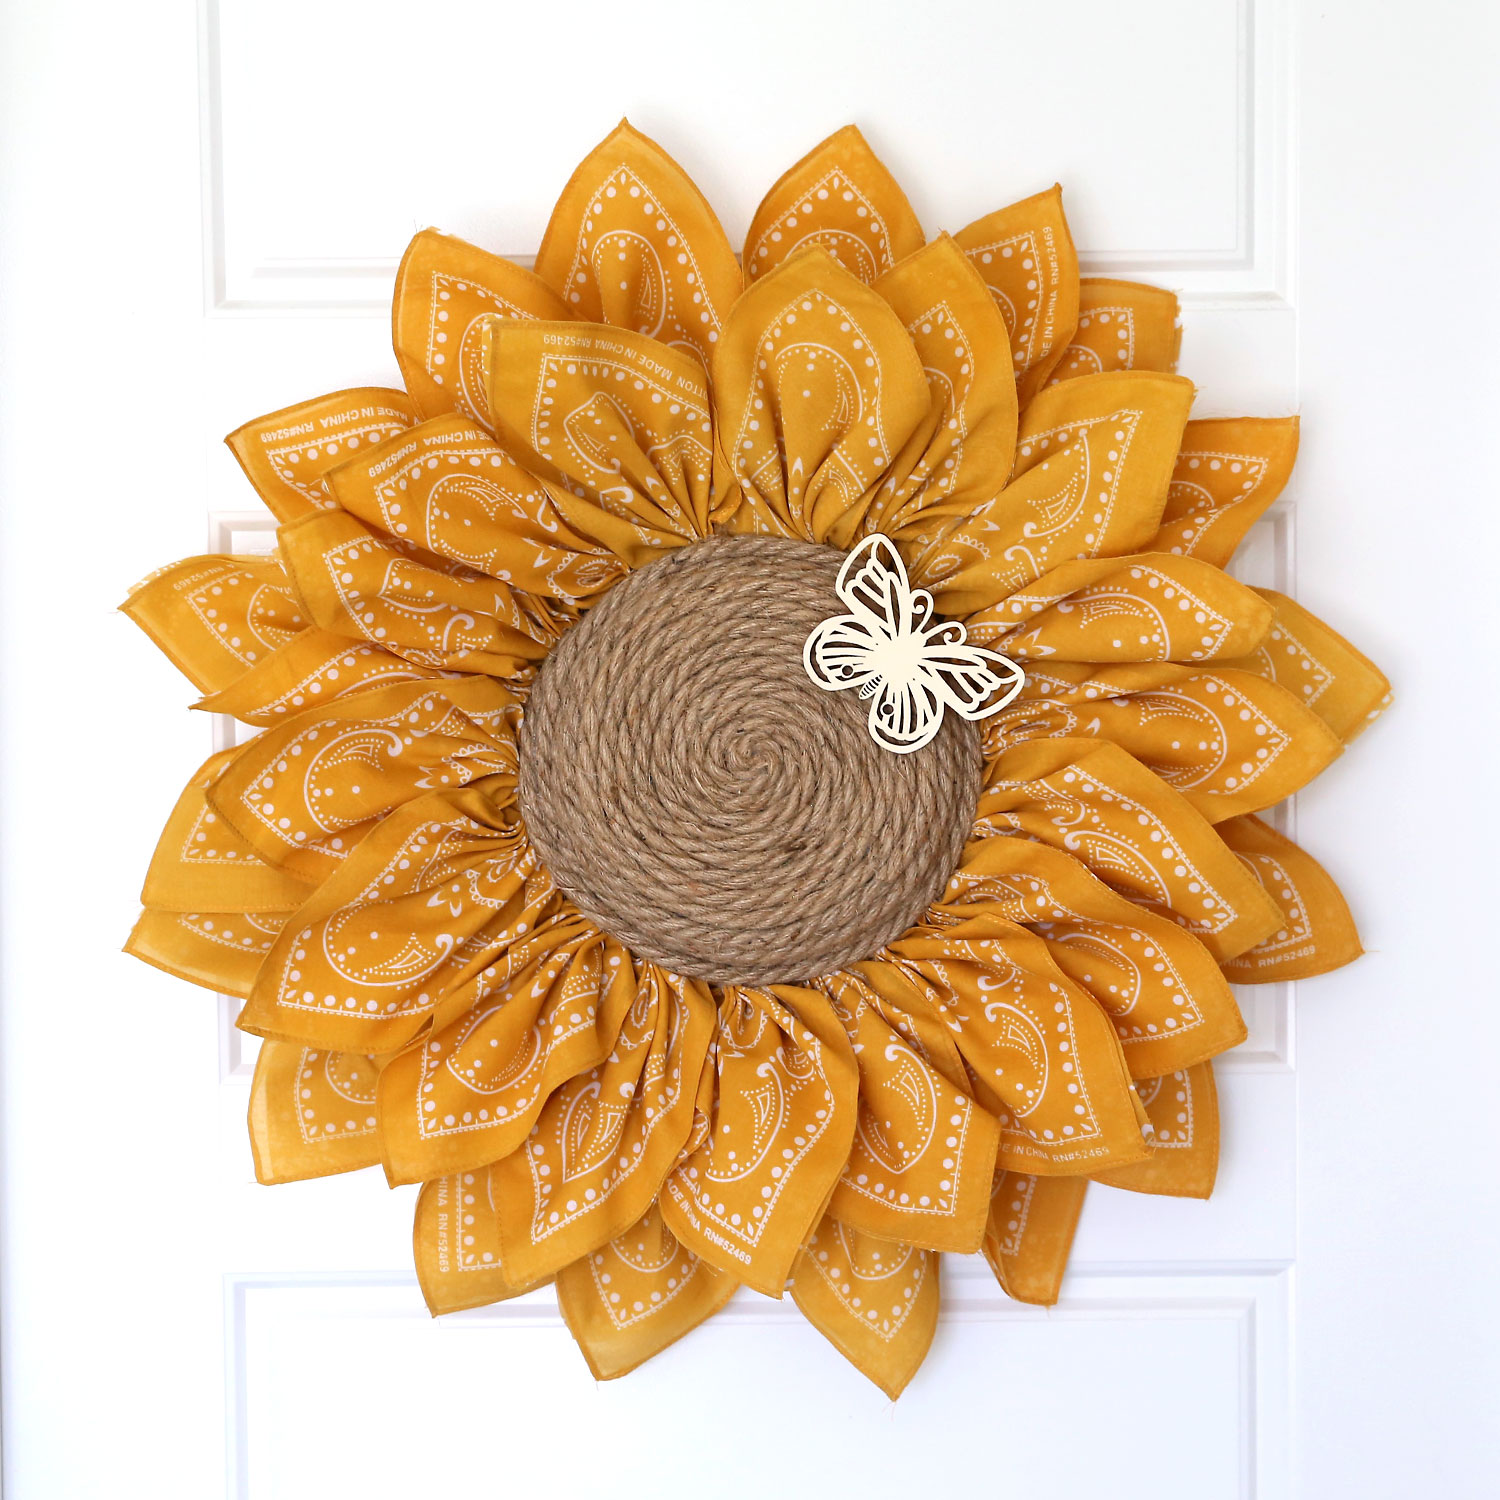 Sunflower wreath made from bandanas.